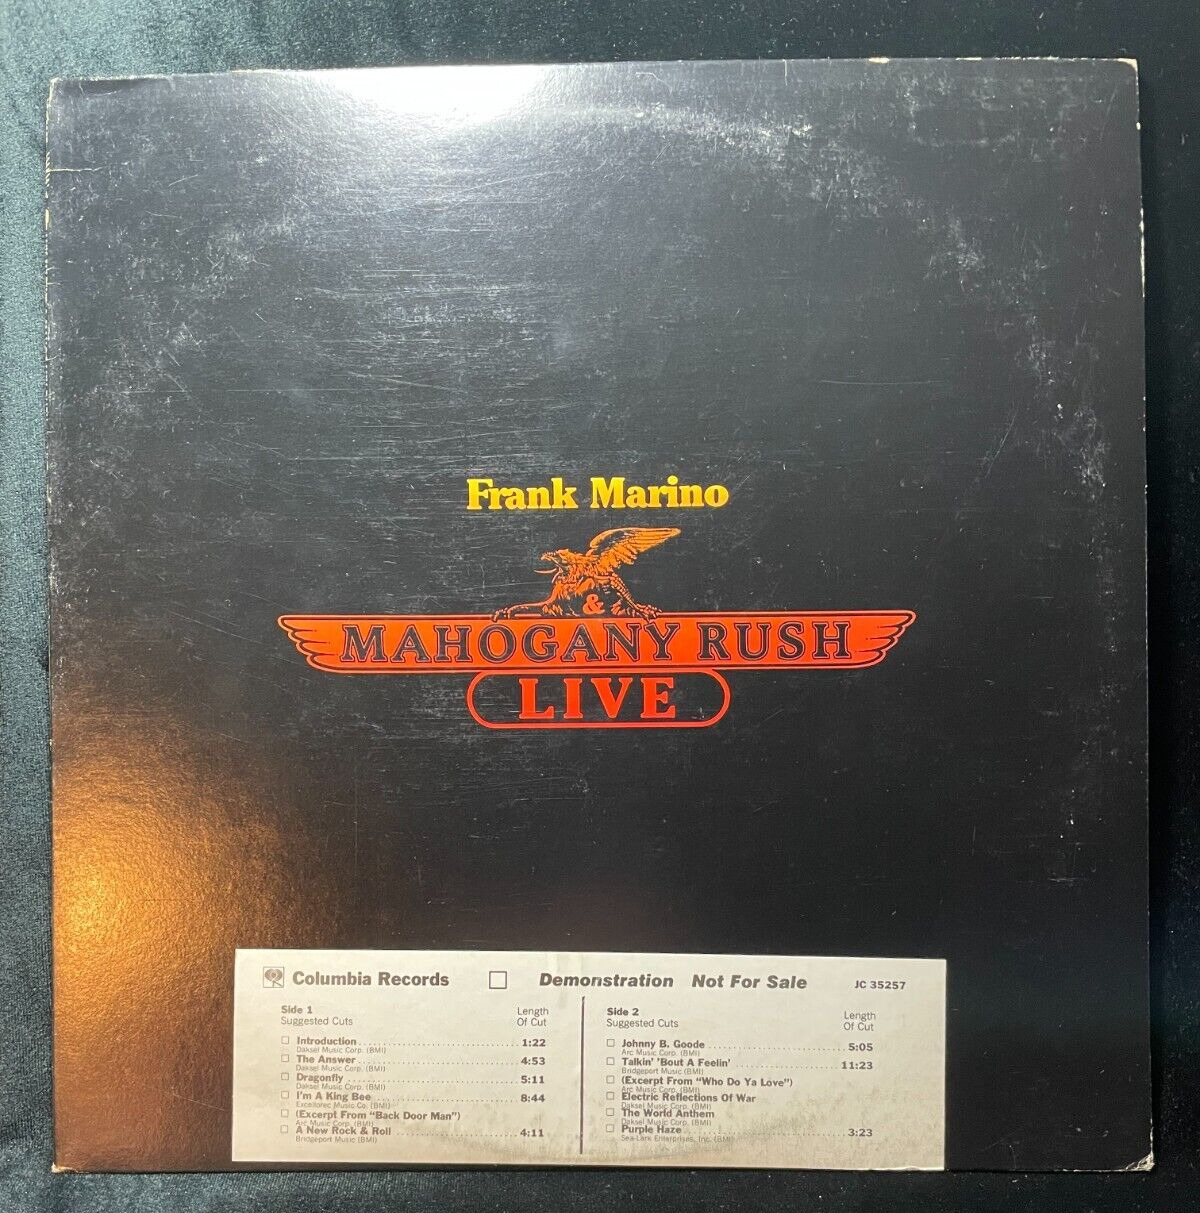 1978 VINYL PROMO LP COLUMBIA RECORDS JC35257 MAHOGANY RUSH LIVE FRANK MARINO VG+